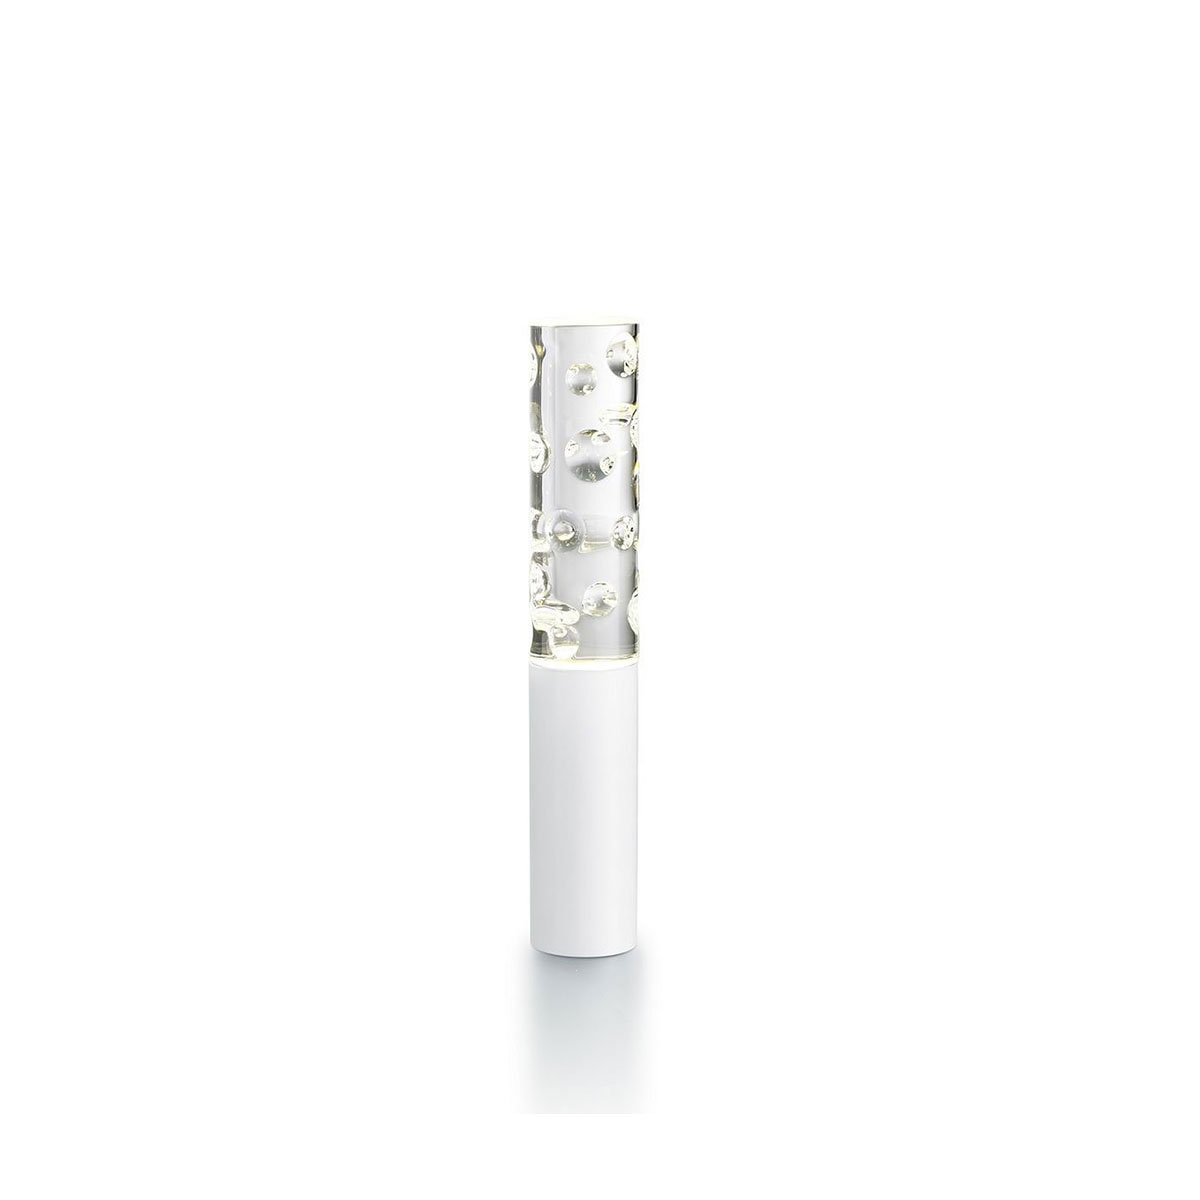 Baccarat Crystal, Jallum Pontil Candle Lamp, 1 Lamp, White